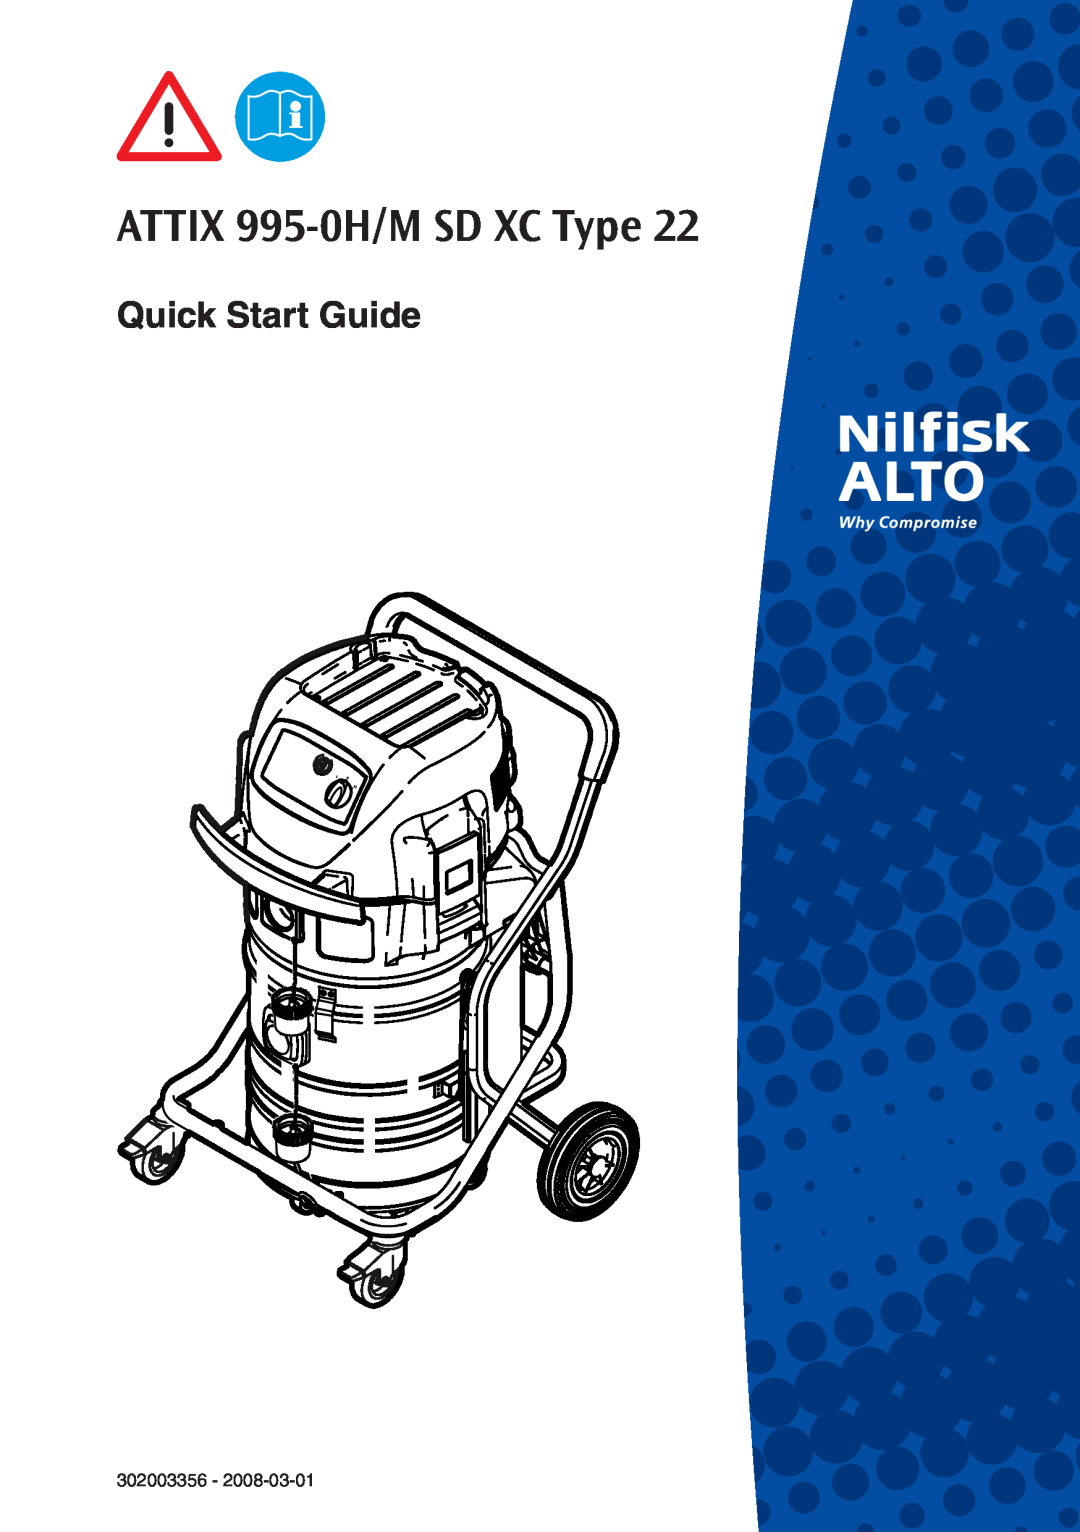 Nilfisk-ALTO M SD XC Type 22 quick start Quick Start Guide, ATTIX 995-0H/MSD XC Type, 302003356 